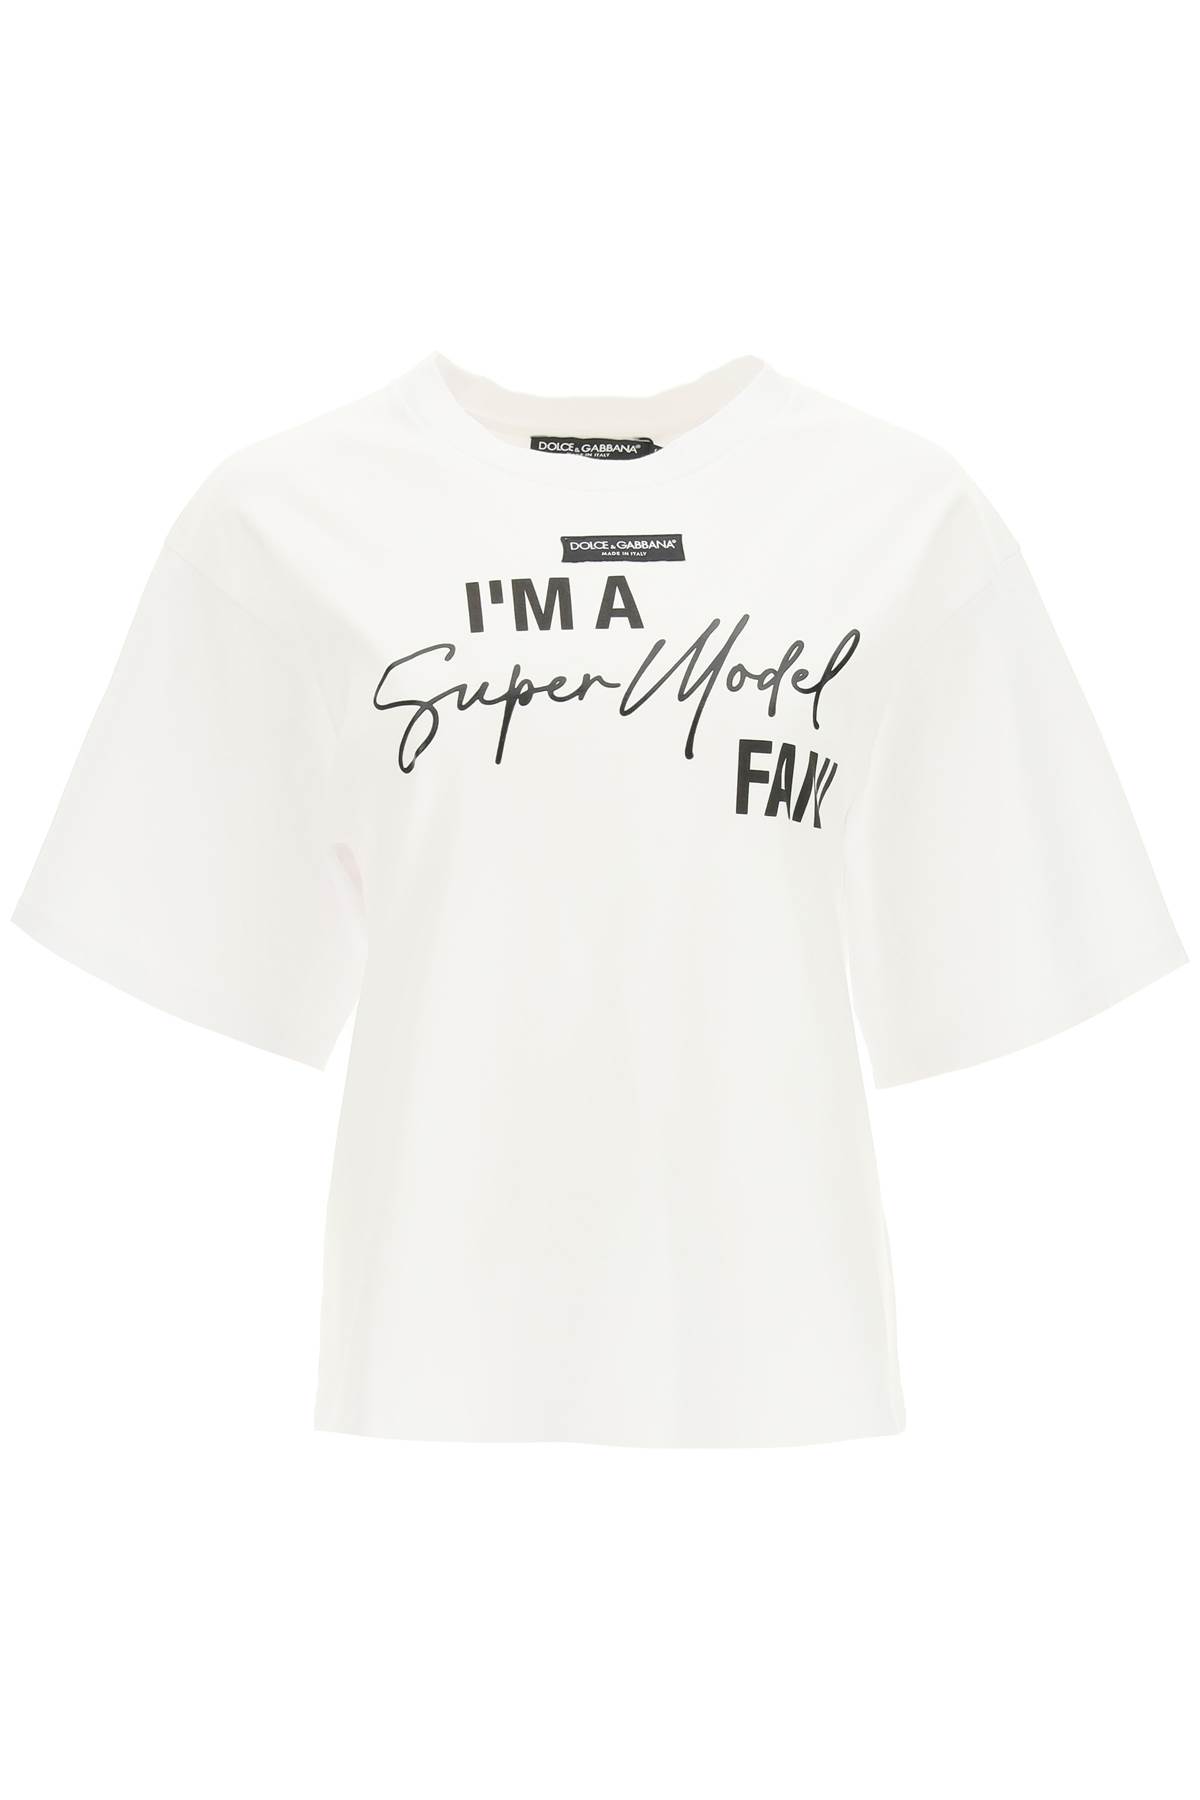 Dolce & Gabbana Super Model Print T-shirt